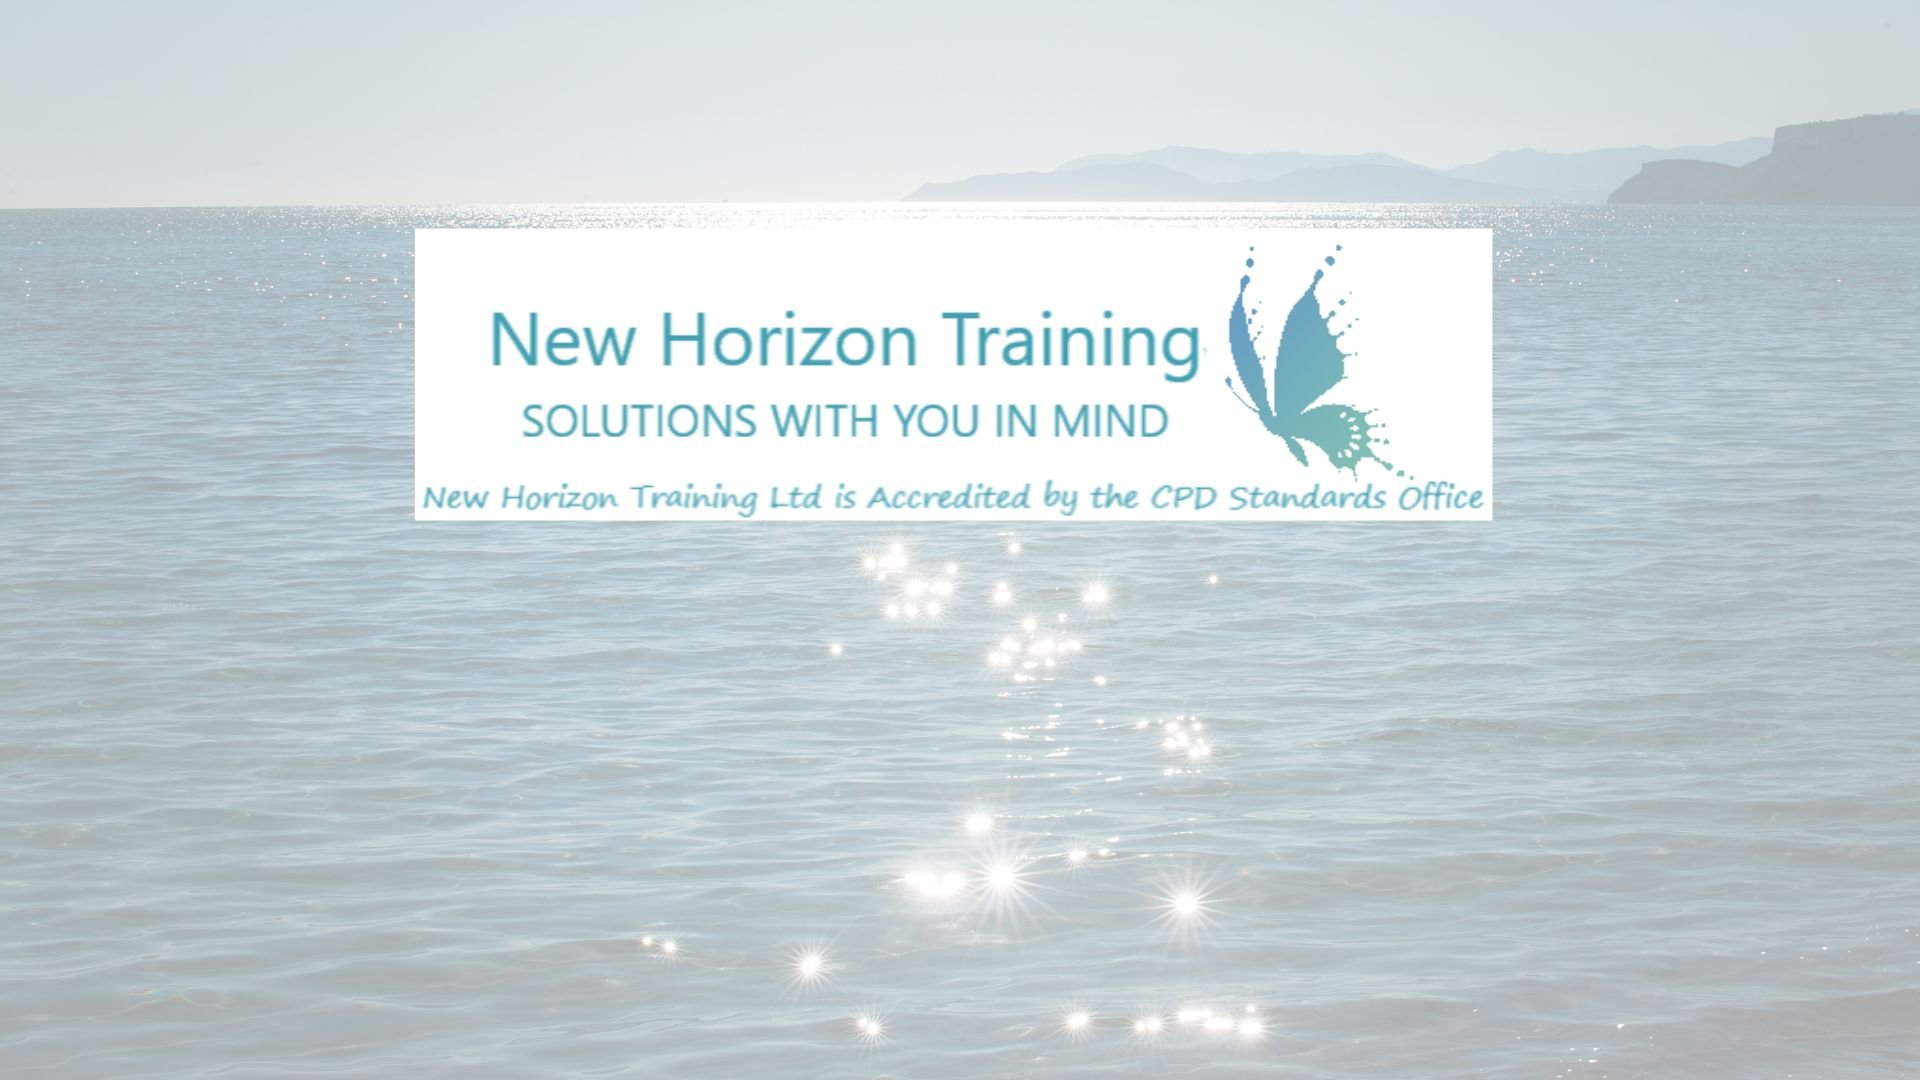 New Horizon Training Ltd